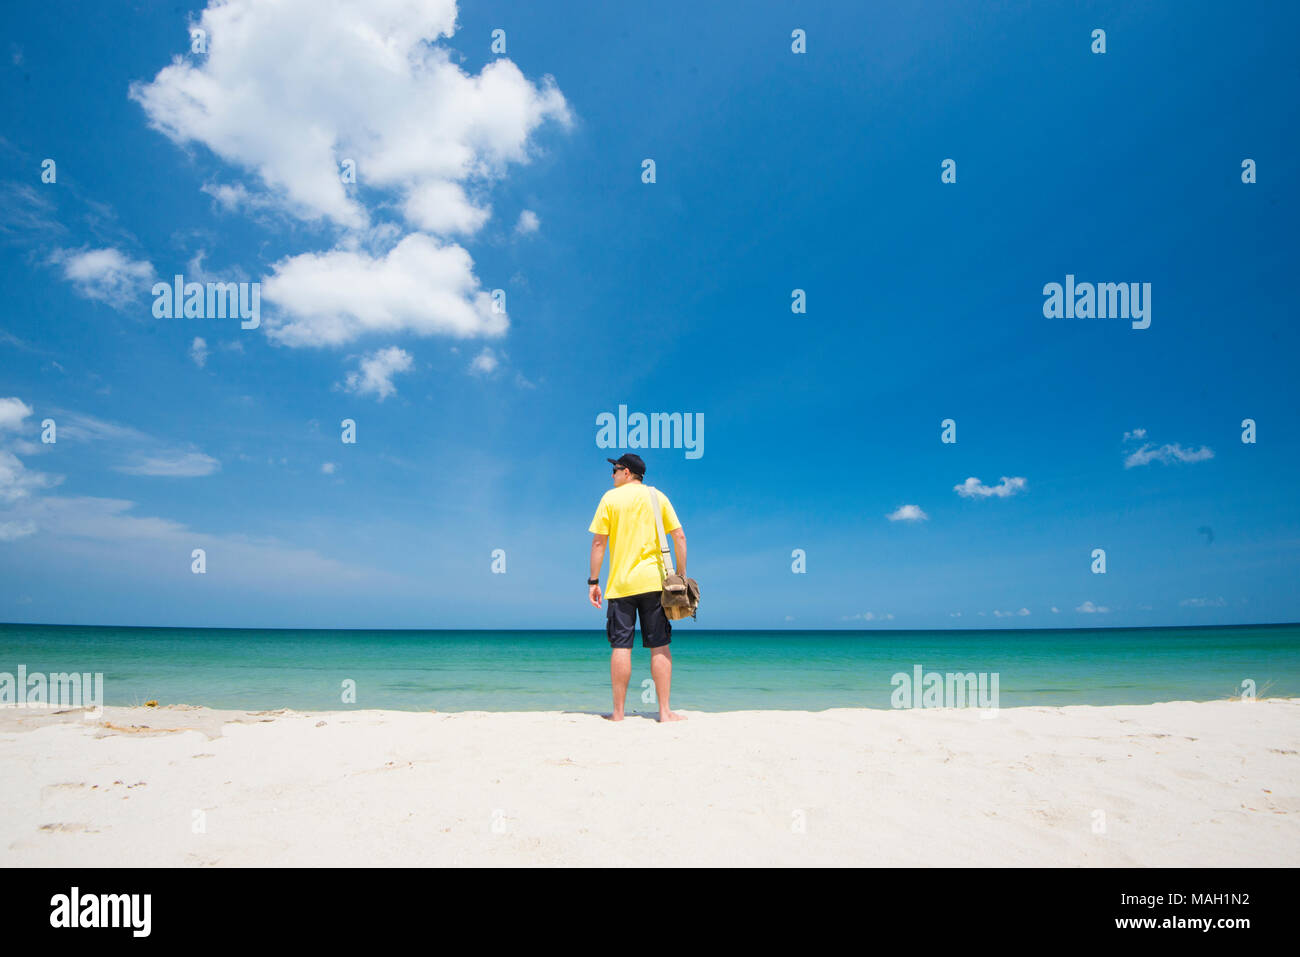 A man standing on a beach, Kudat, Sabah, Malaysia, Borneo, Stock Photo